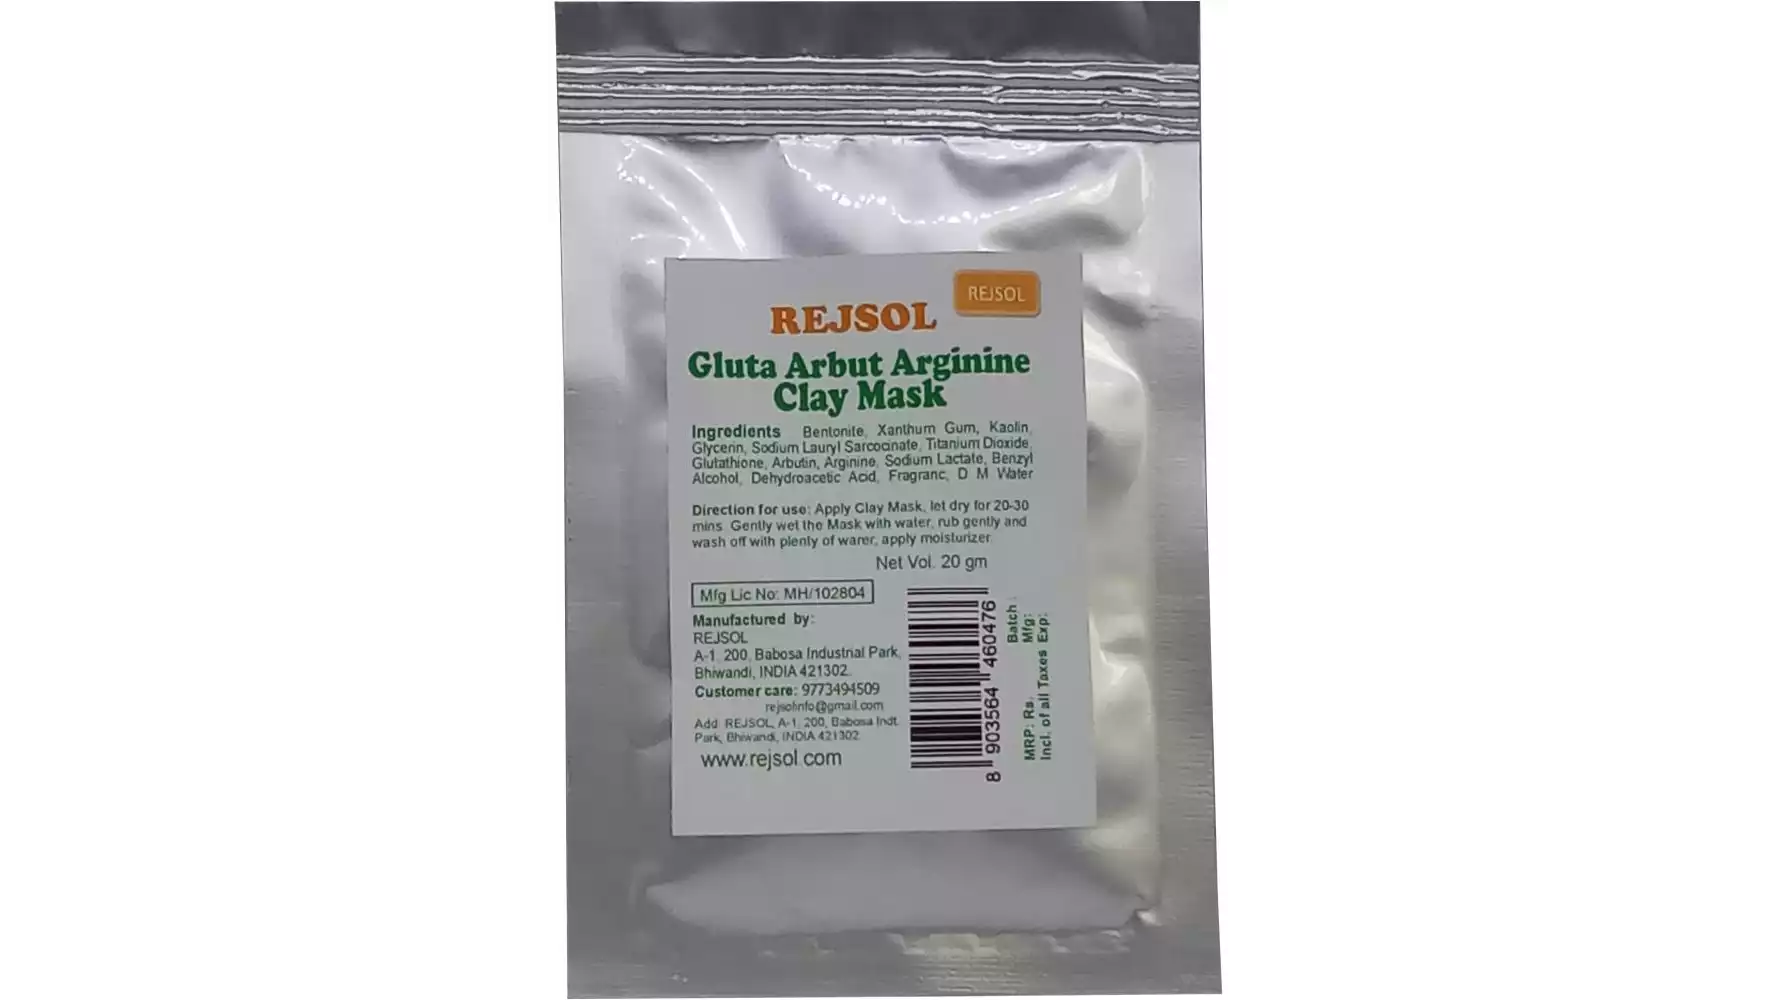 Rejsol Gluta Arbut Arginine Clay Mask (20g, Pack of 10)